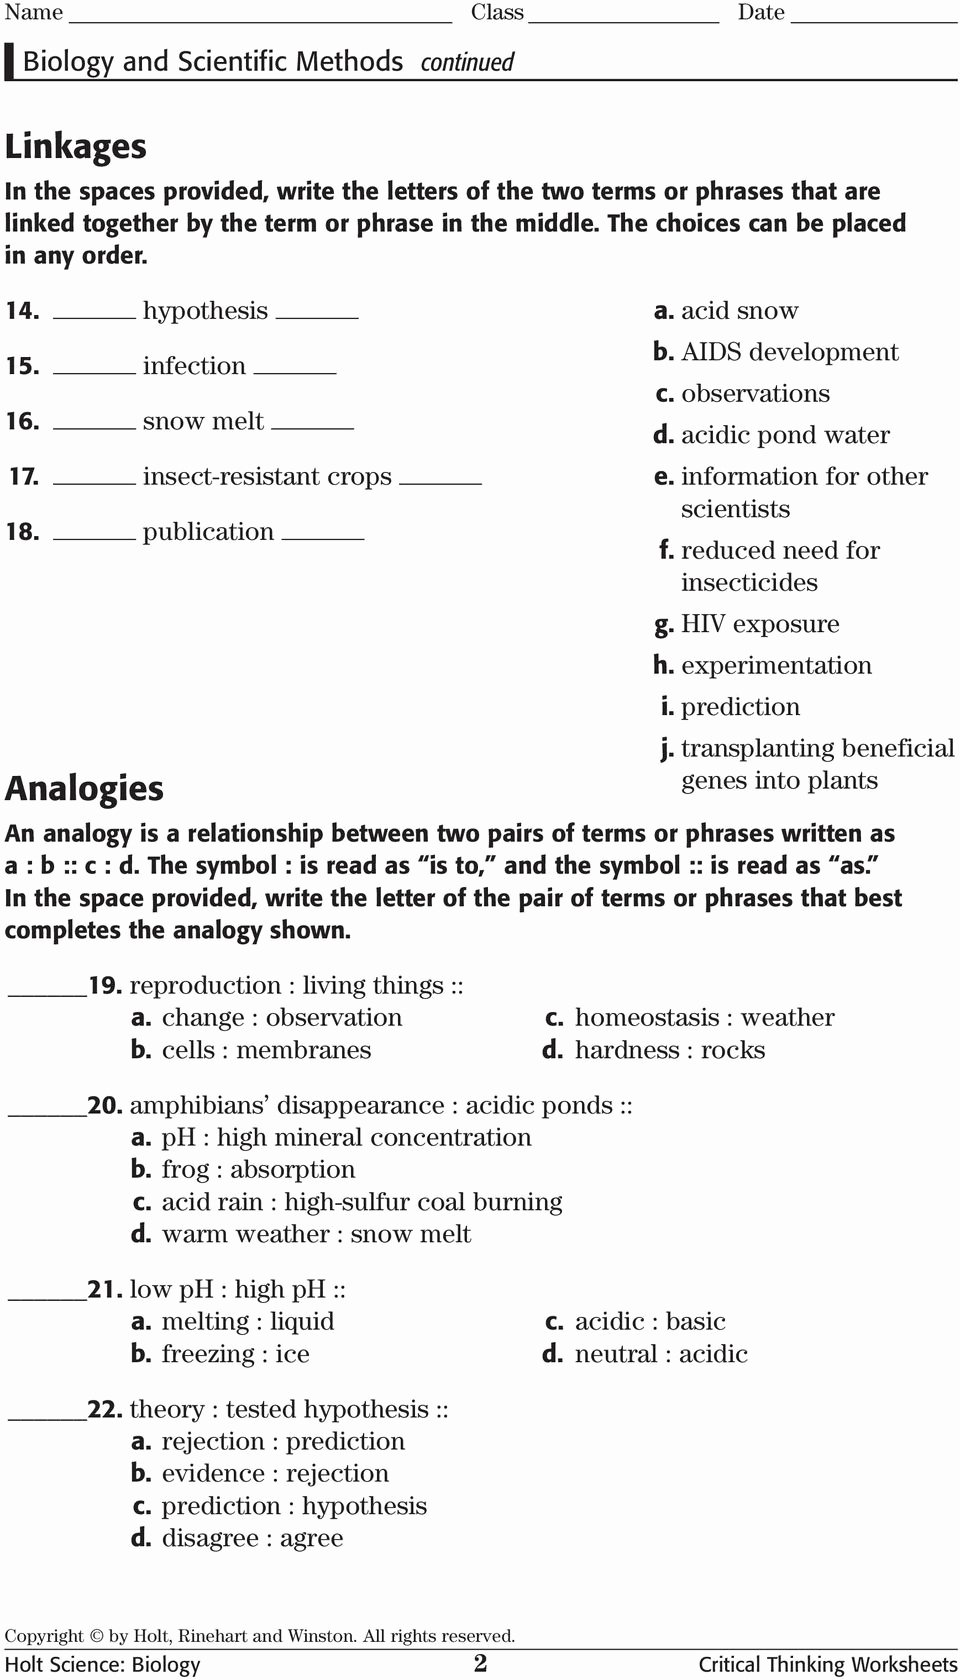 Critical Thinking Skills Worksheet Lovely Holt Science Biology Critical Thinking Worksheets Pdf